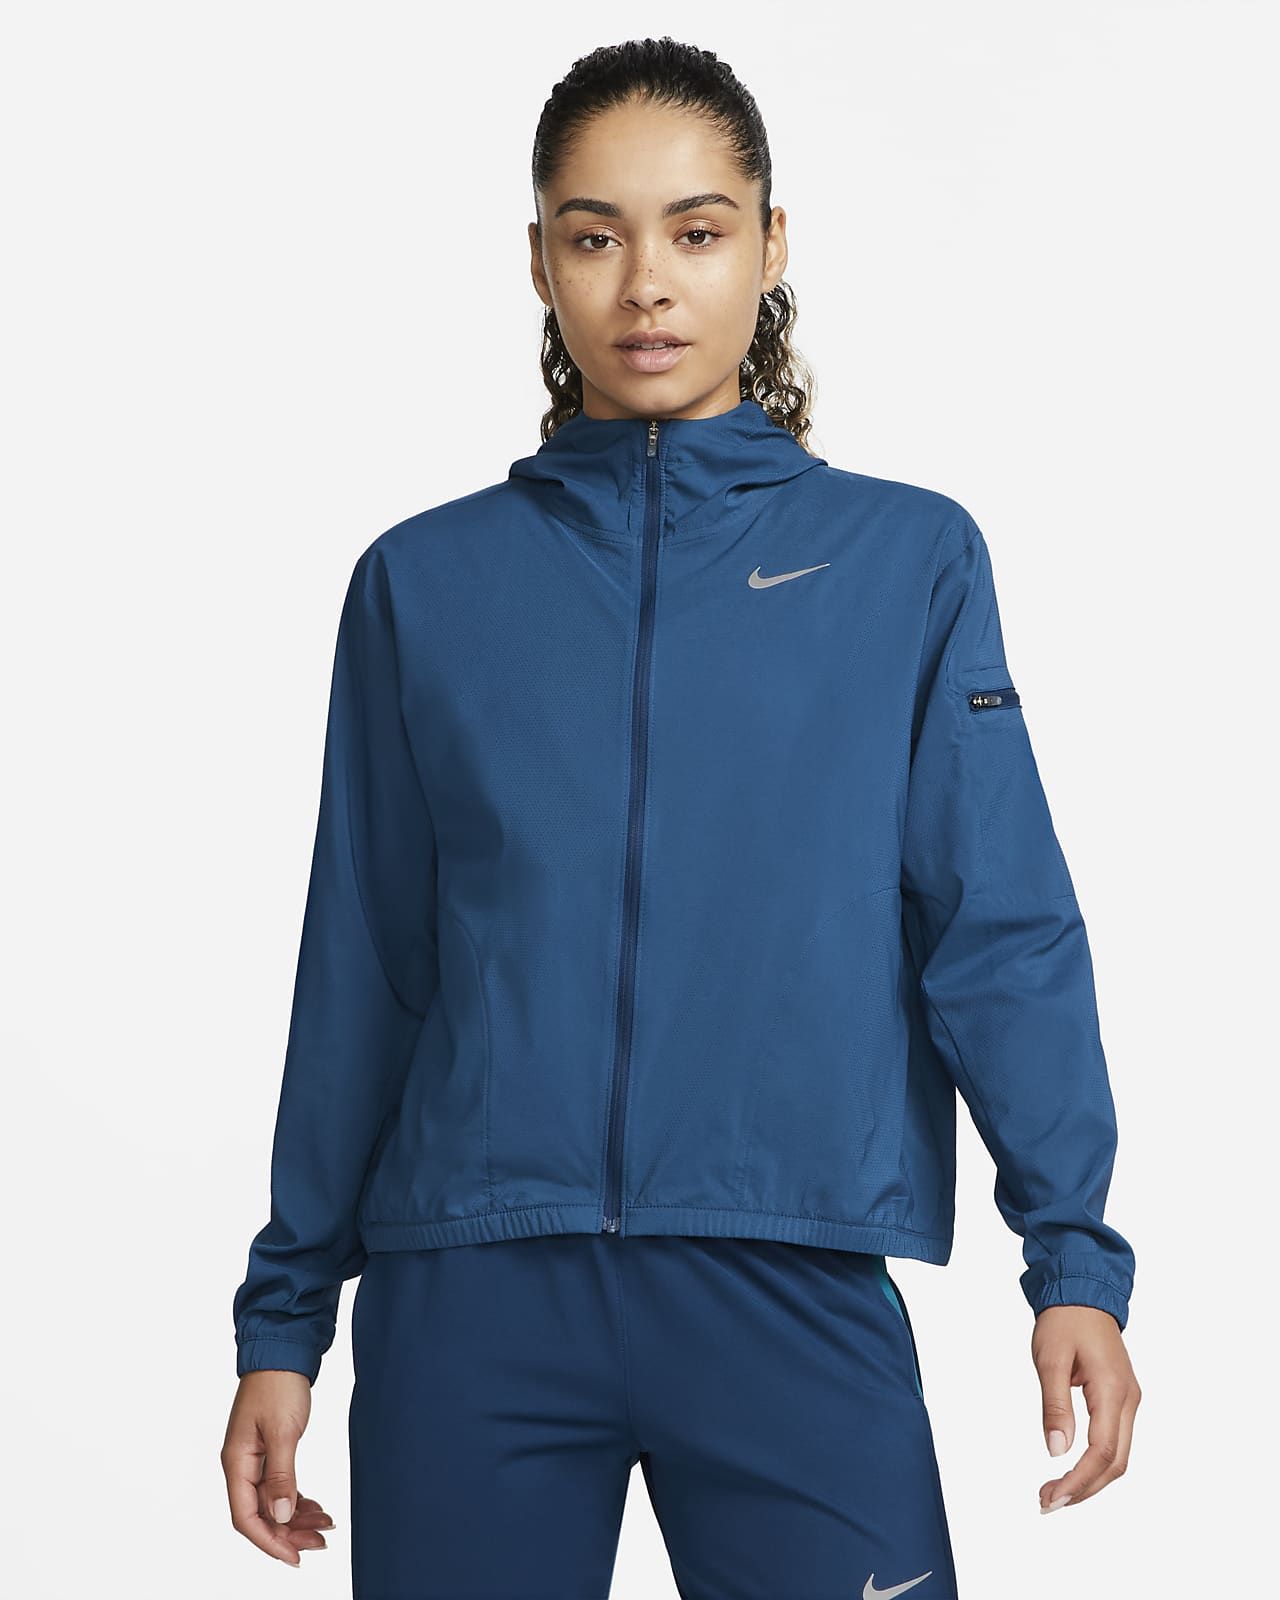 Women's Hooded Running Jacket | Nike (US)